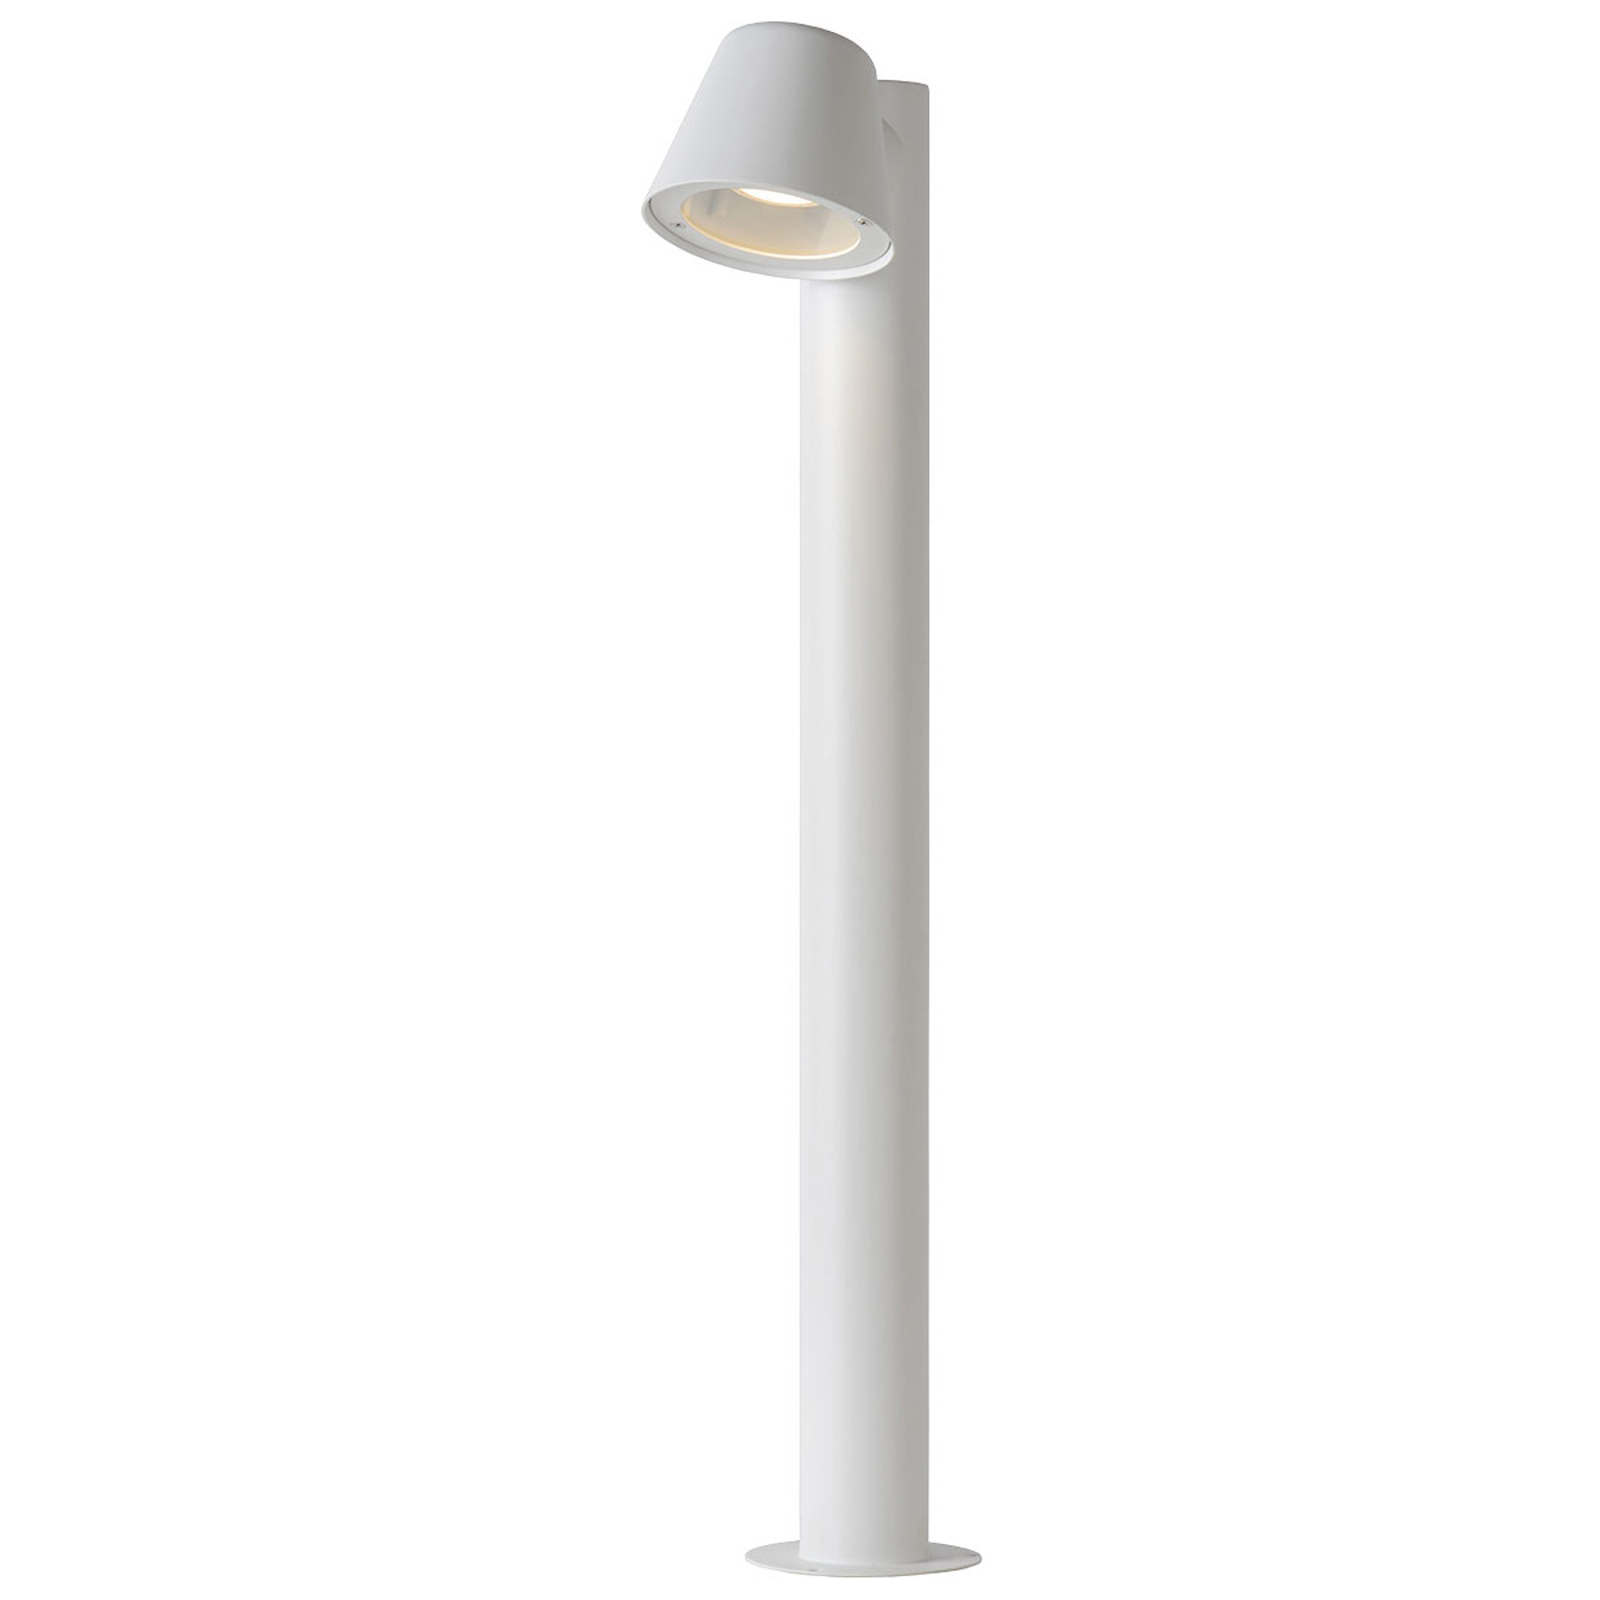 White LED path lamp Dingo with GU10 LED